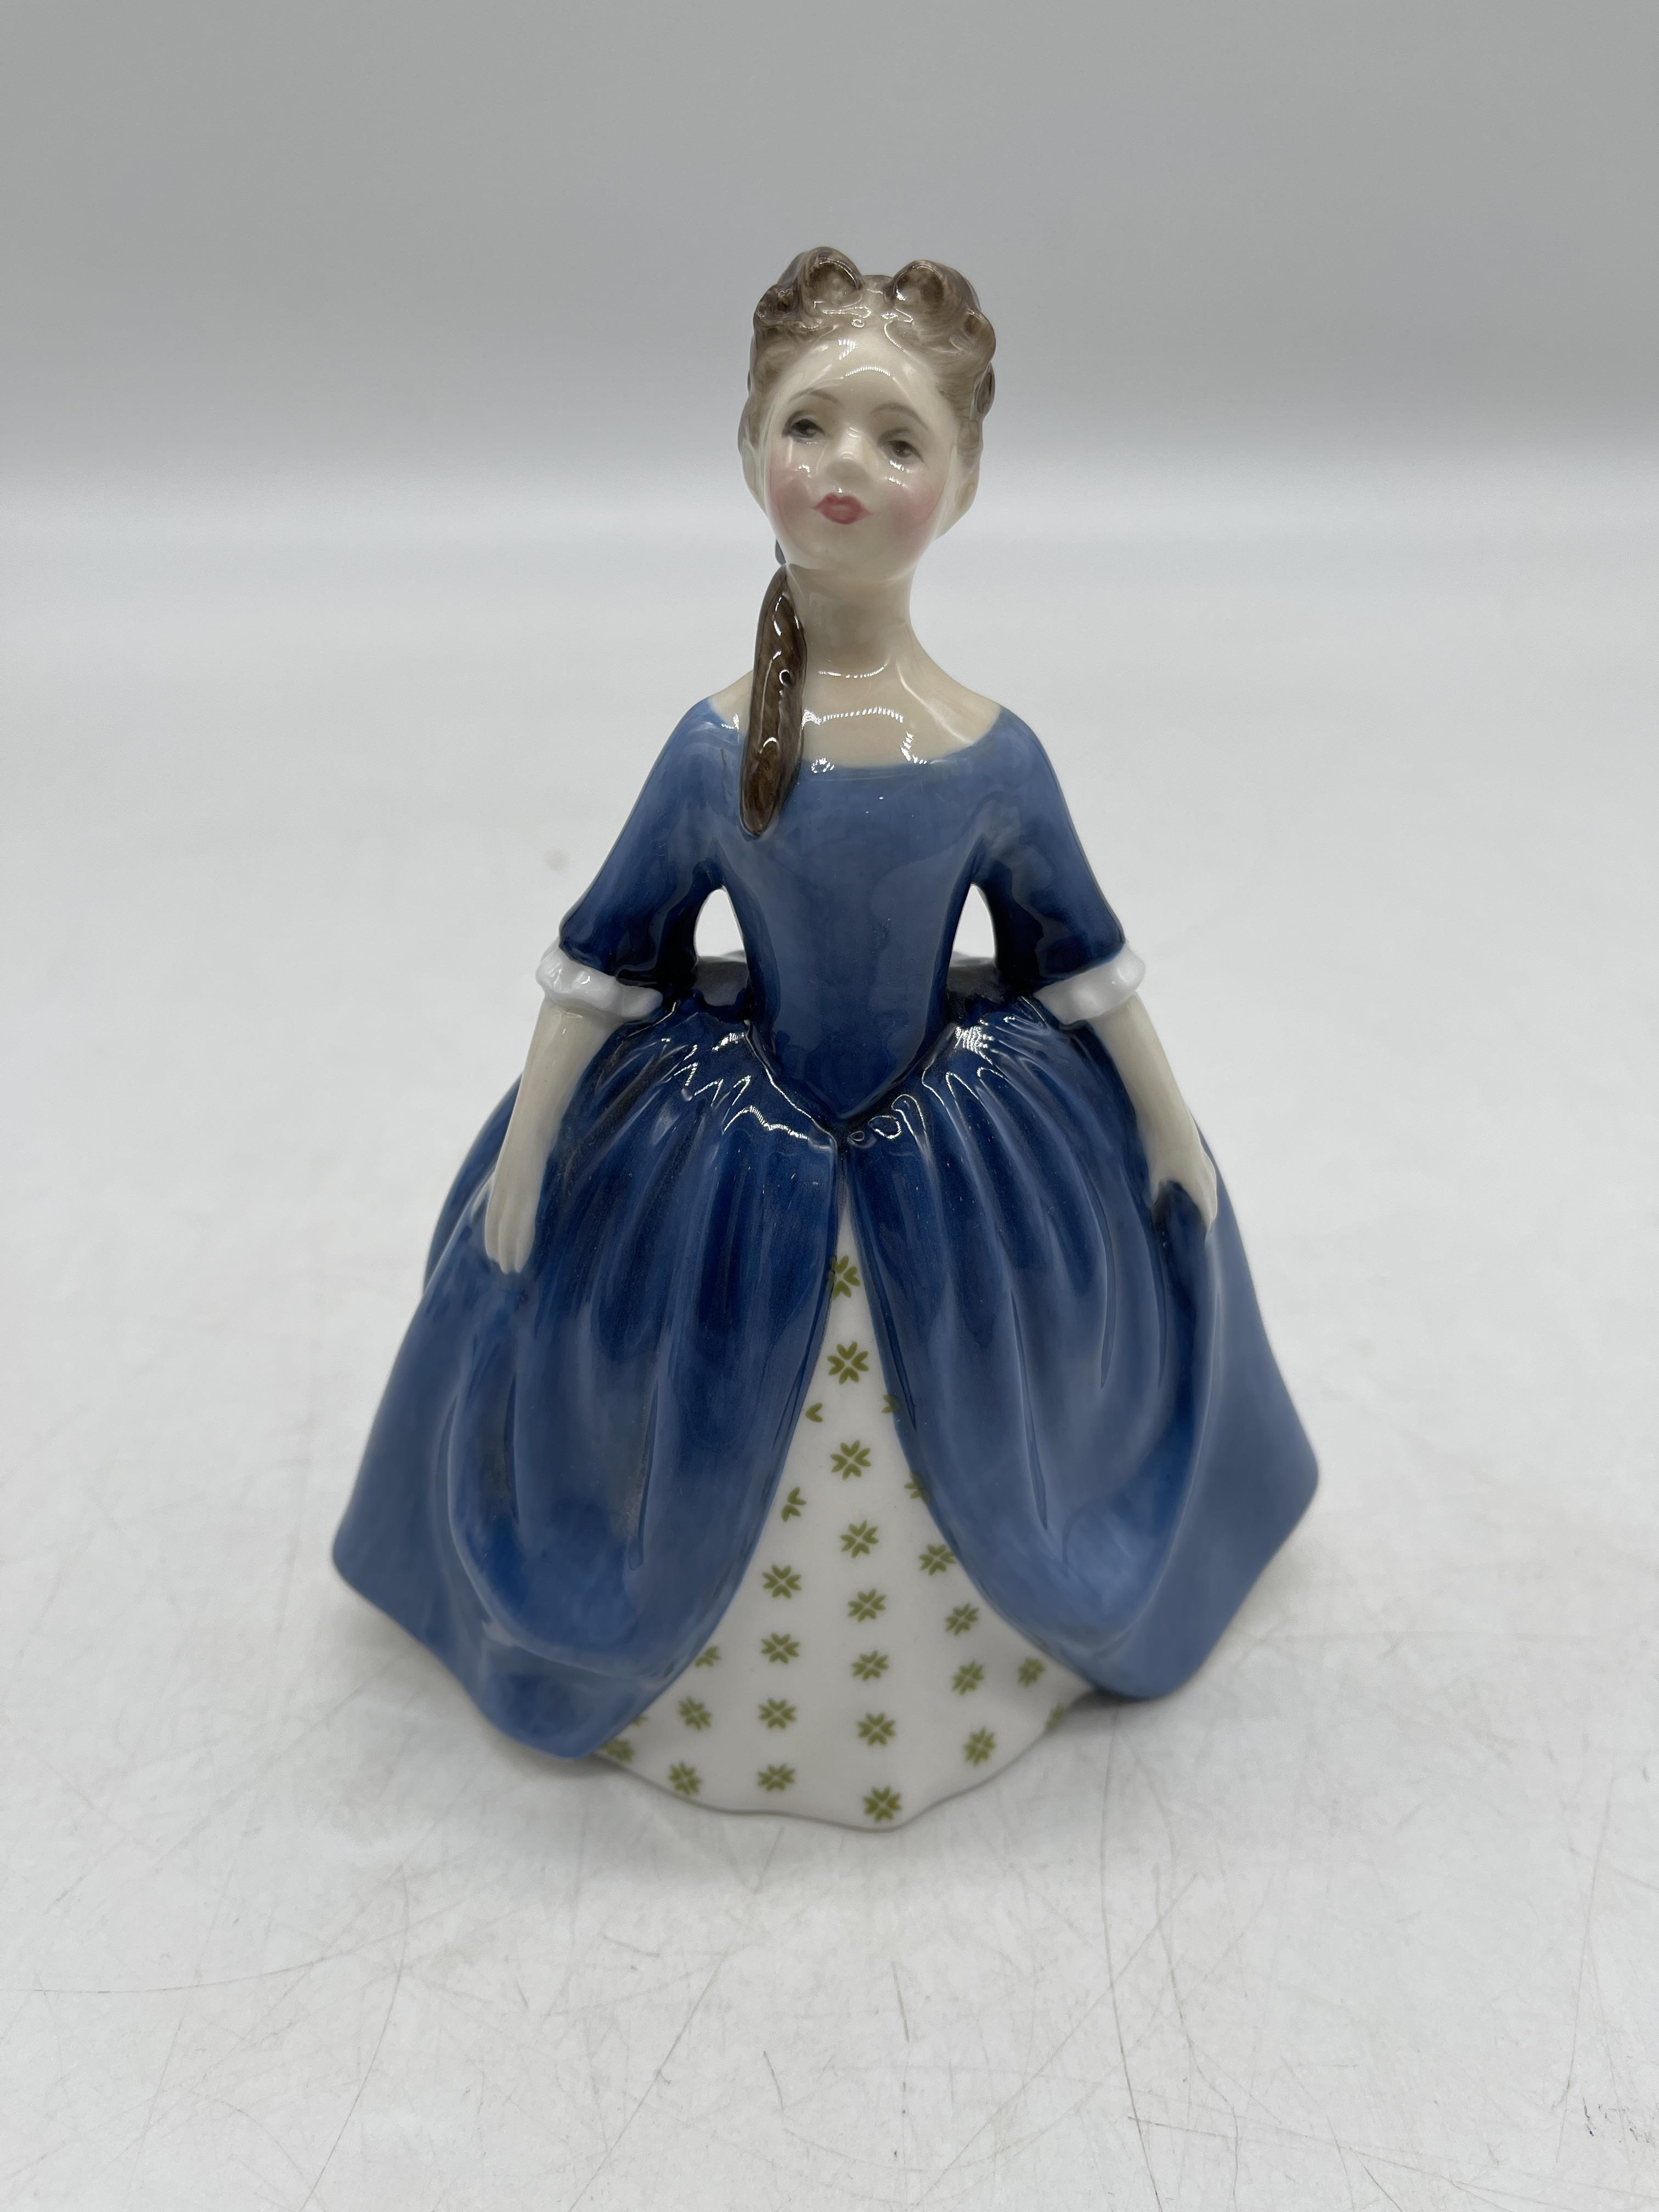 Blue Royal Doulton ceramic figurines - Image 6 of 34